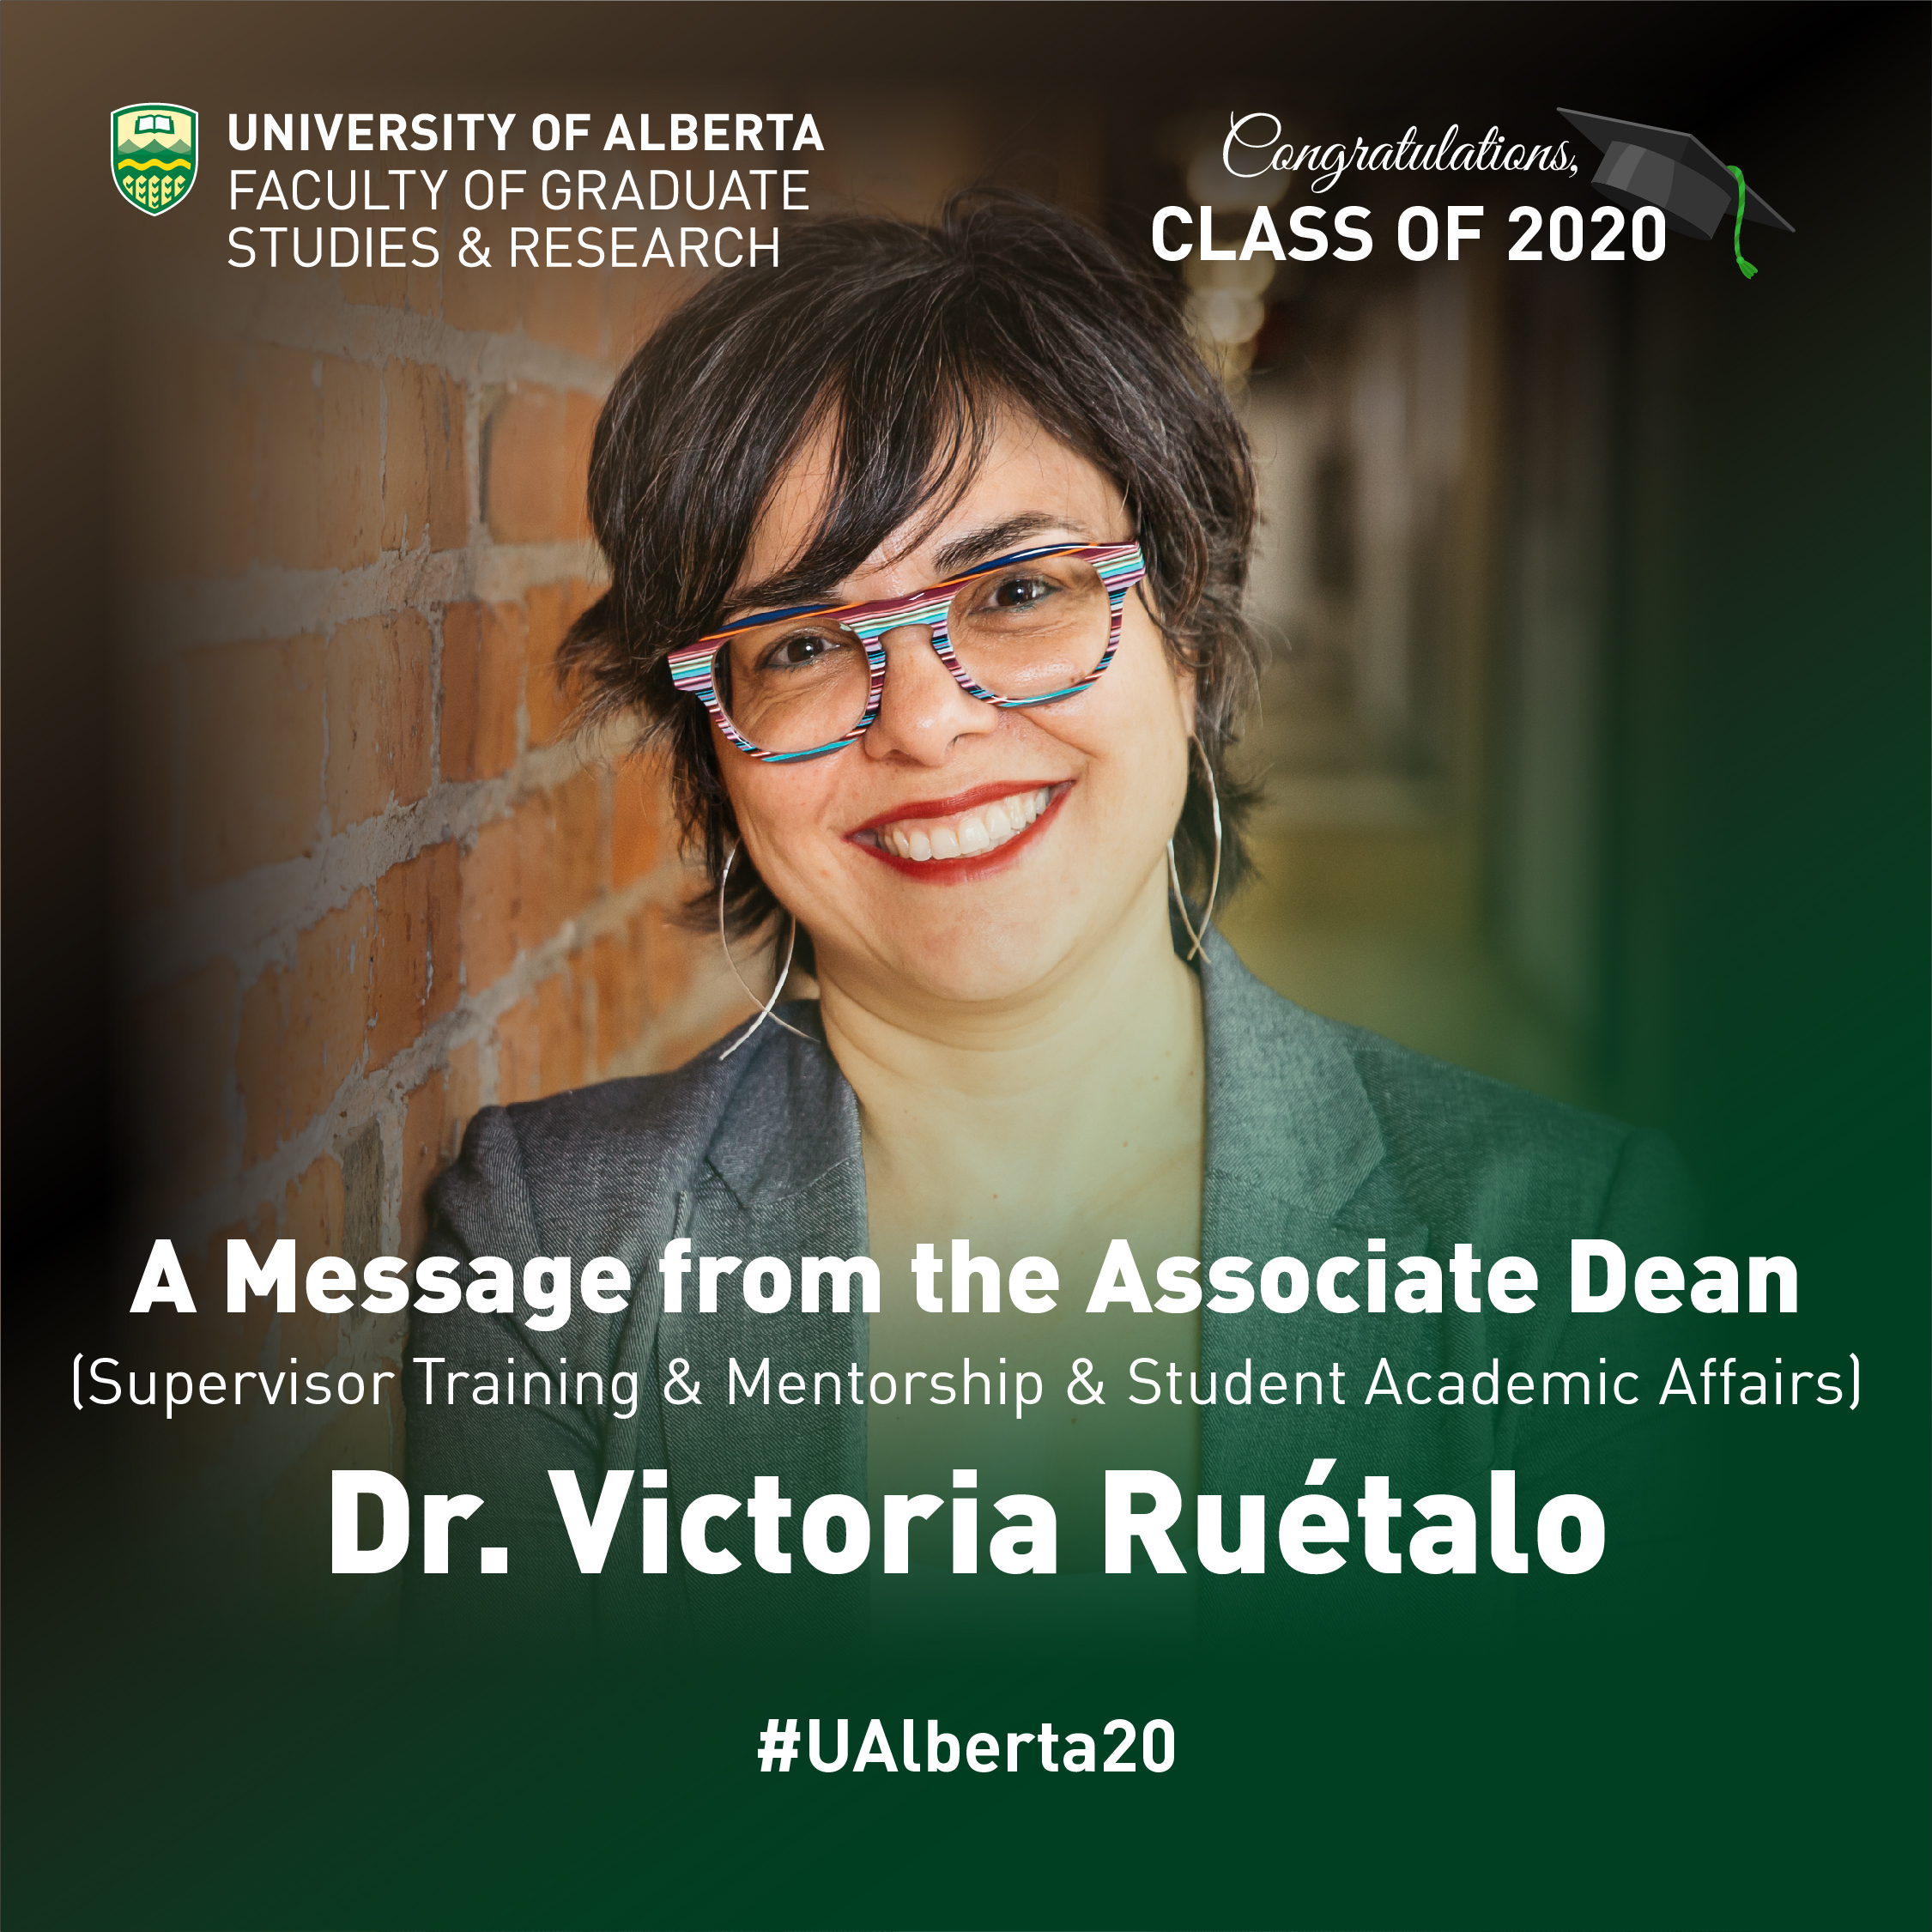 A Message from Dr. Victoria Ruétalo, FGSR Associate Dean (Supervisor Training & Mentorship & Student Academic Affairs)